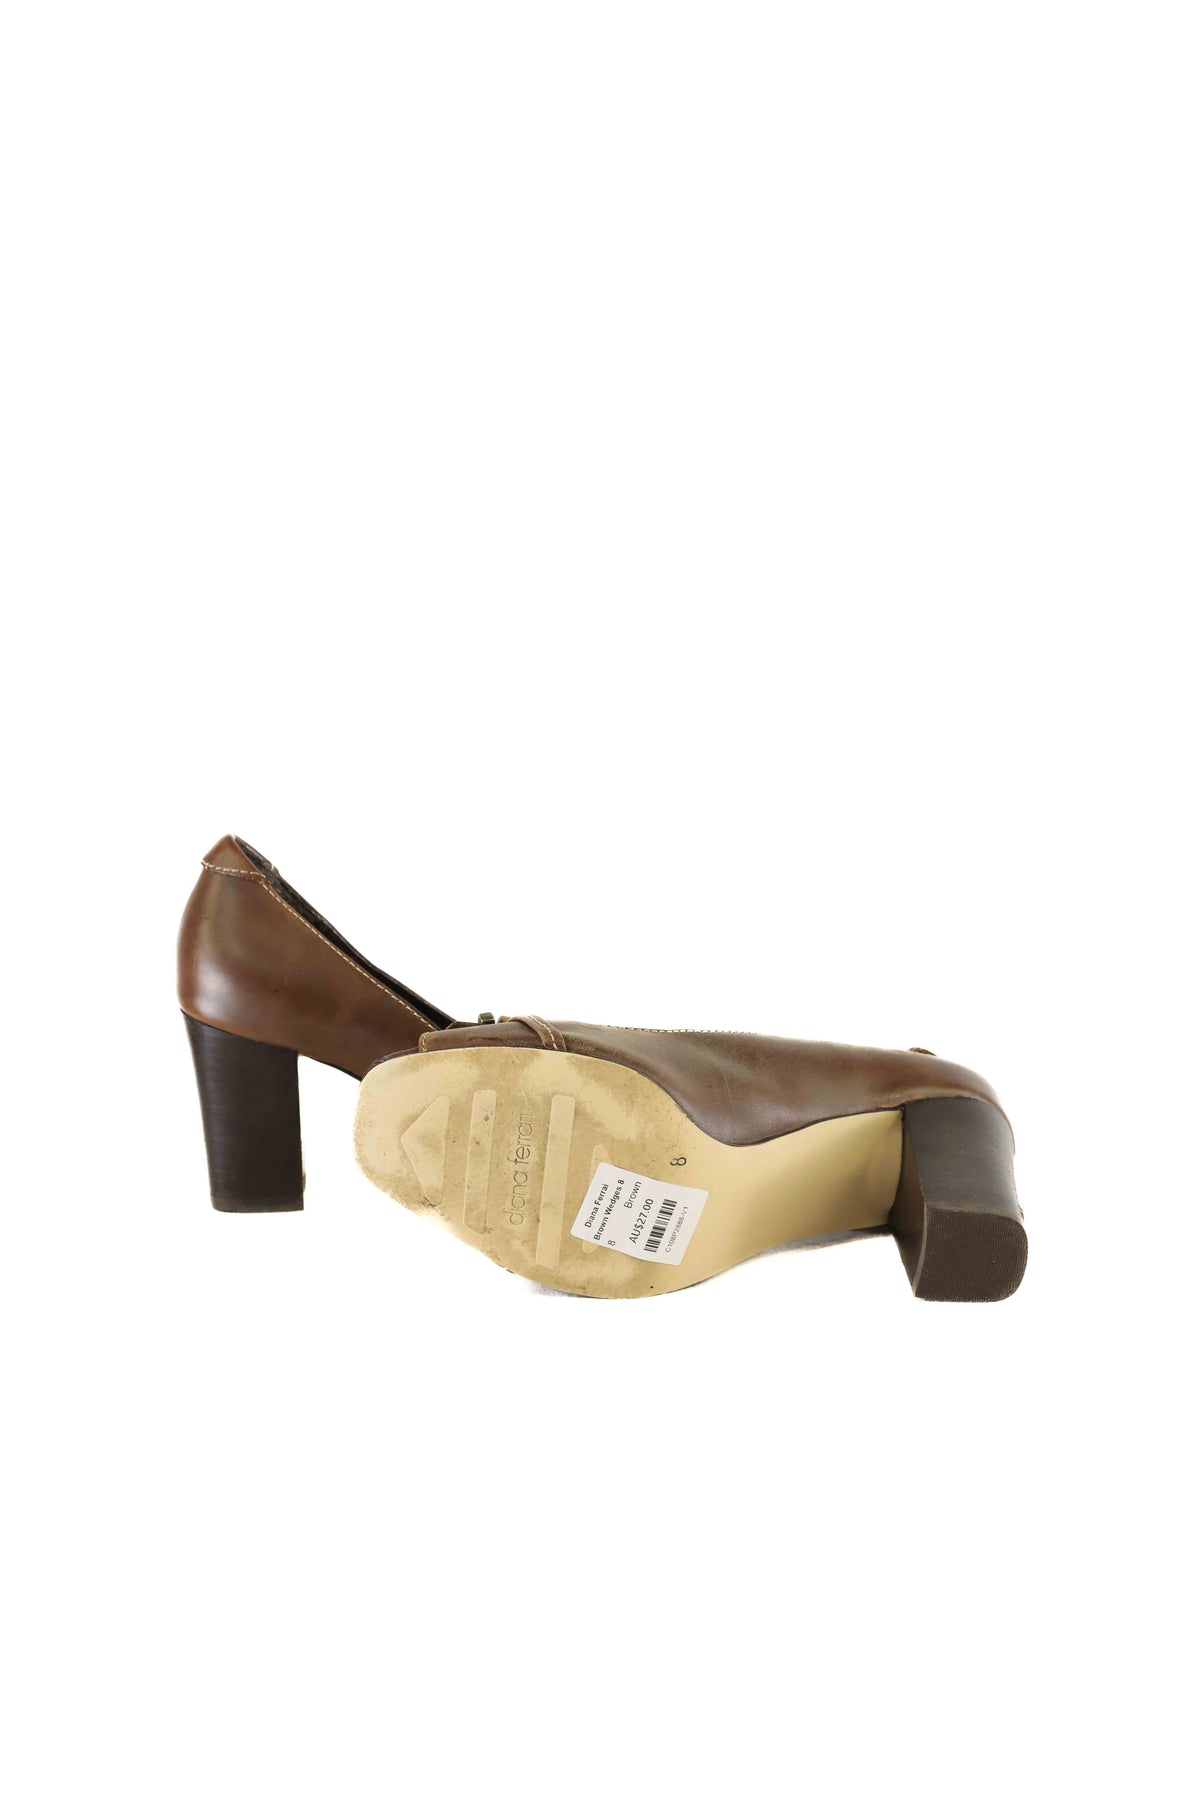 Diana Ferrari Brown Heels 8